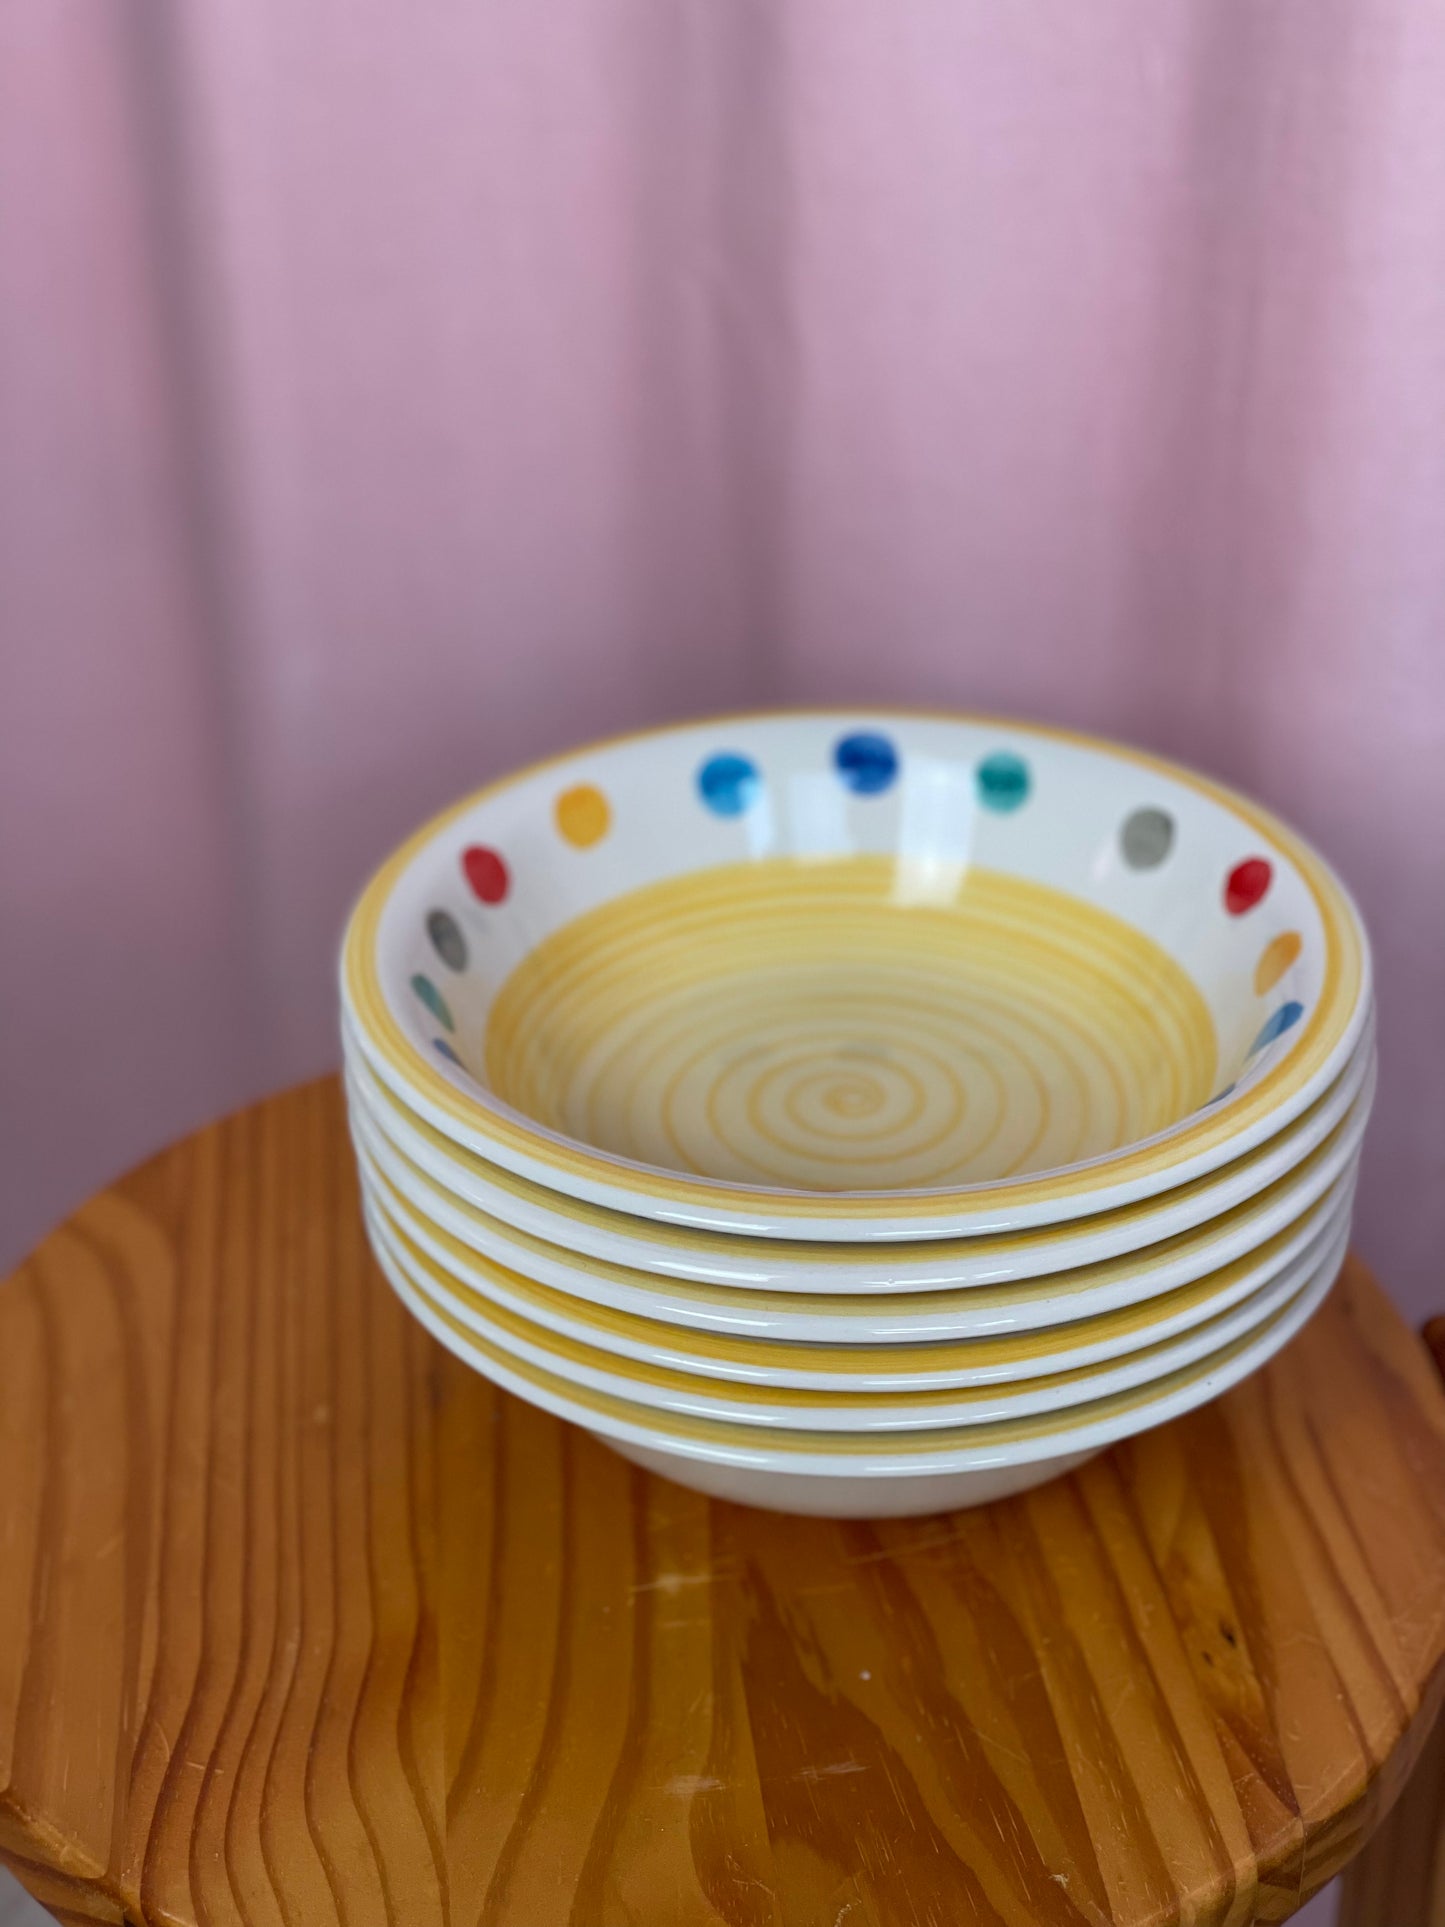 Deep plates - Tivoli style